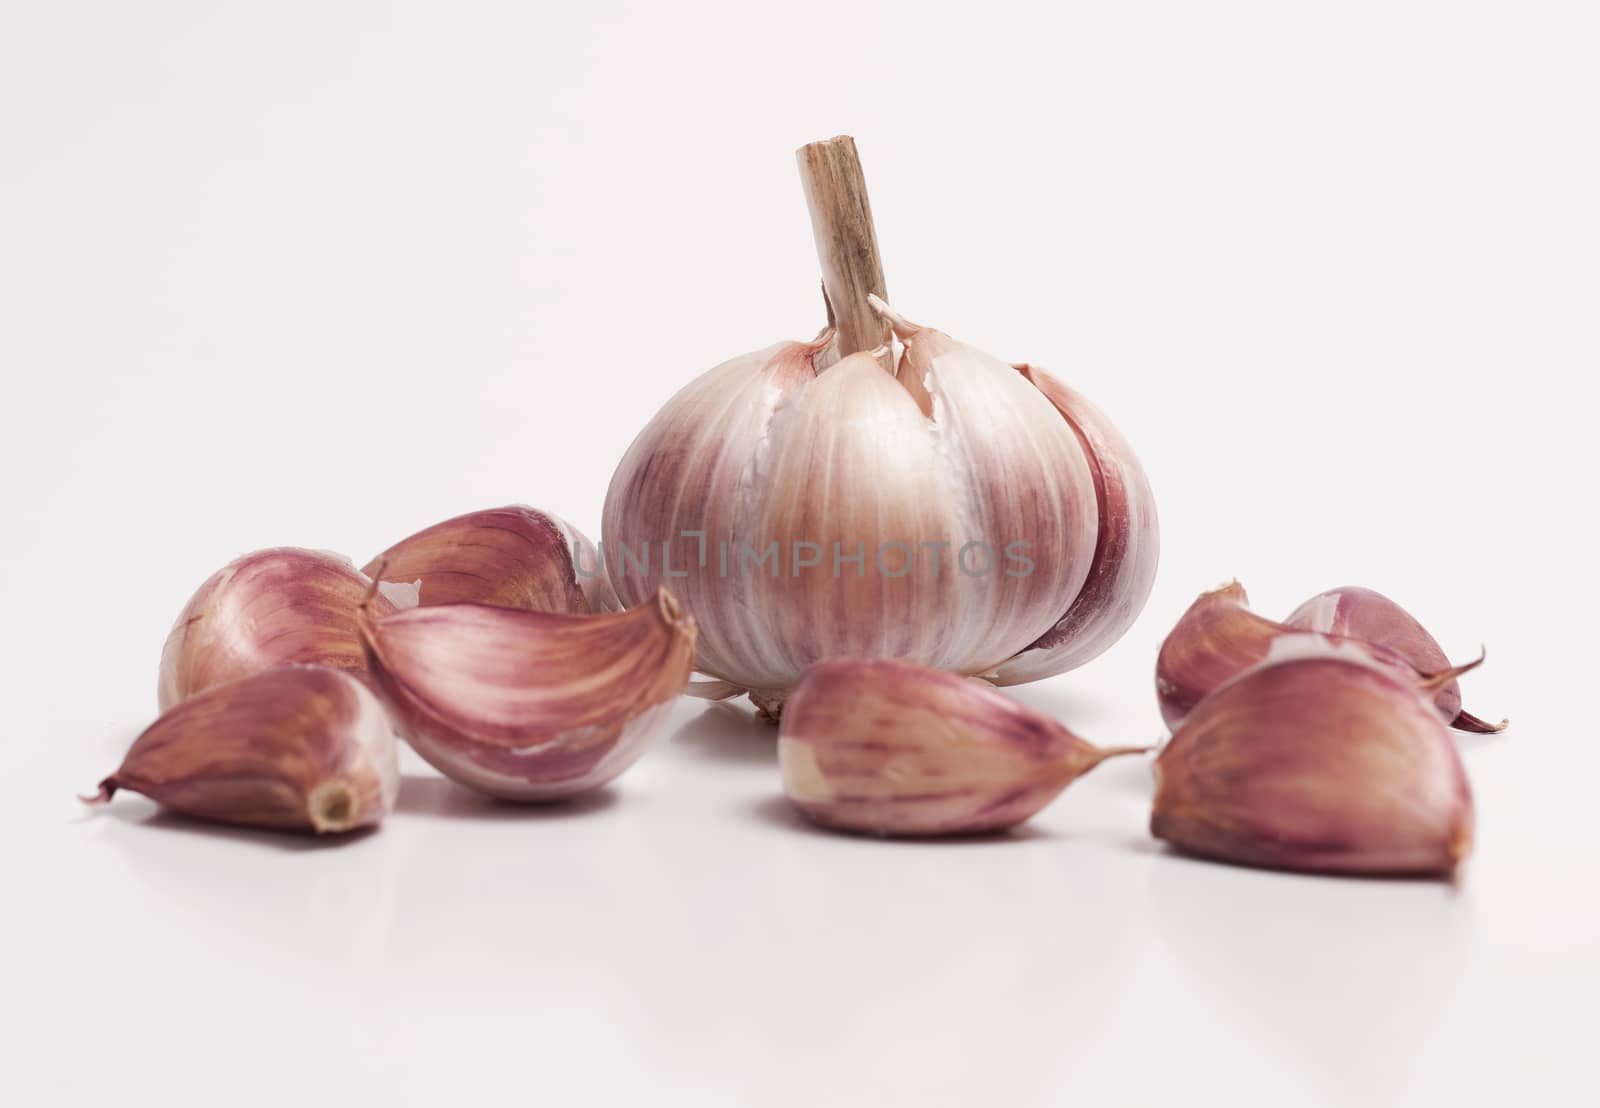 Garlic Bulb and a Individual Cloves by rodrigobellizzi